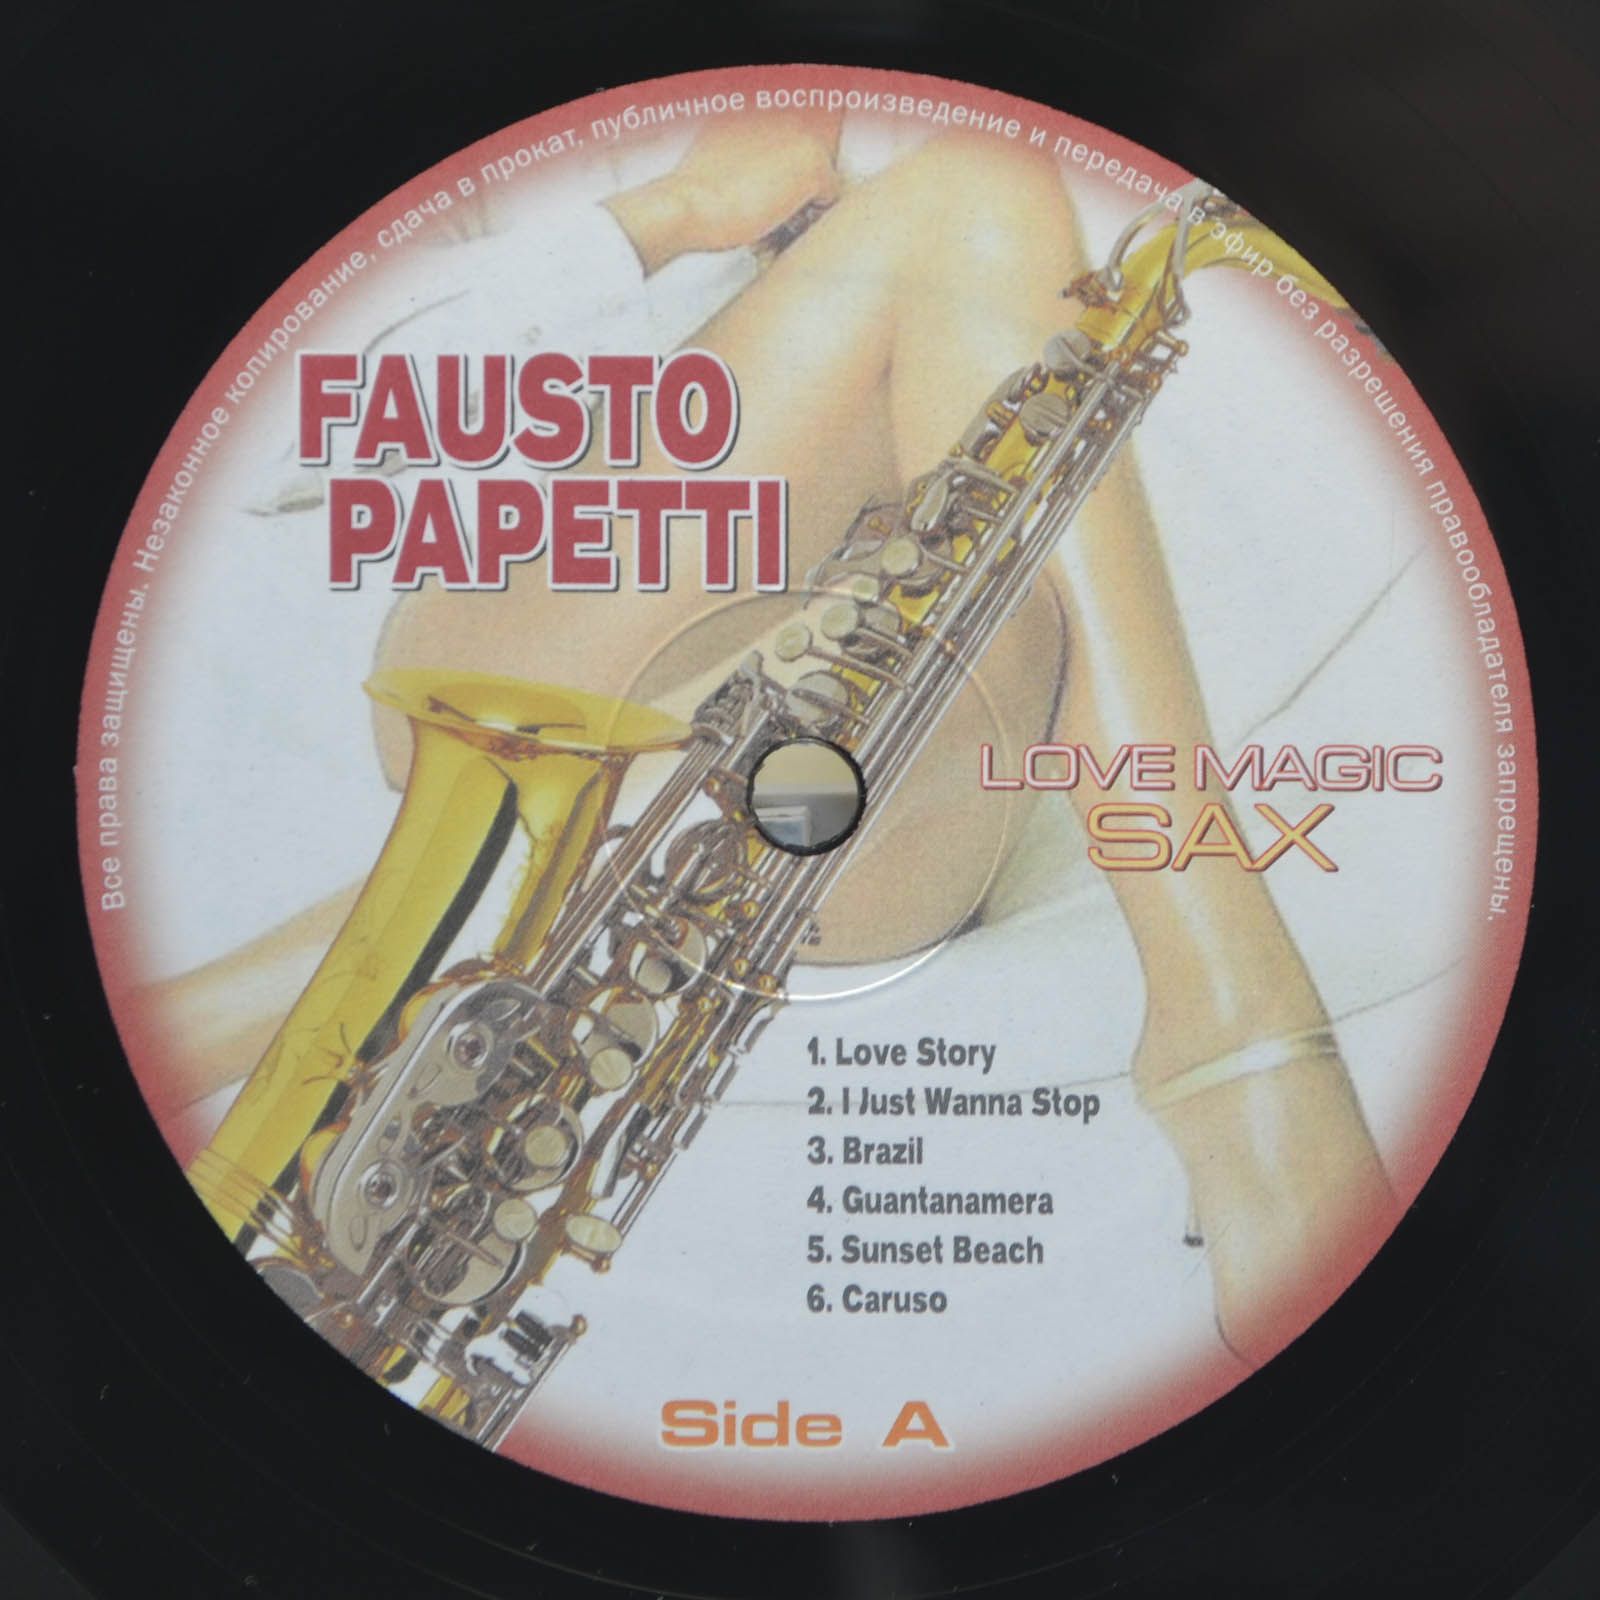 Fausto Papetti — Love Magic Sax, 2018